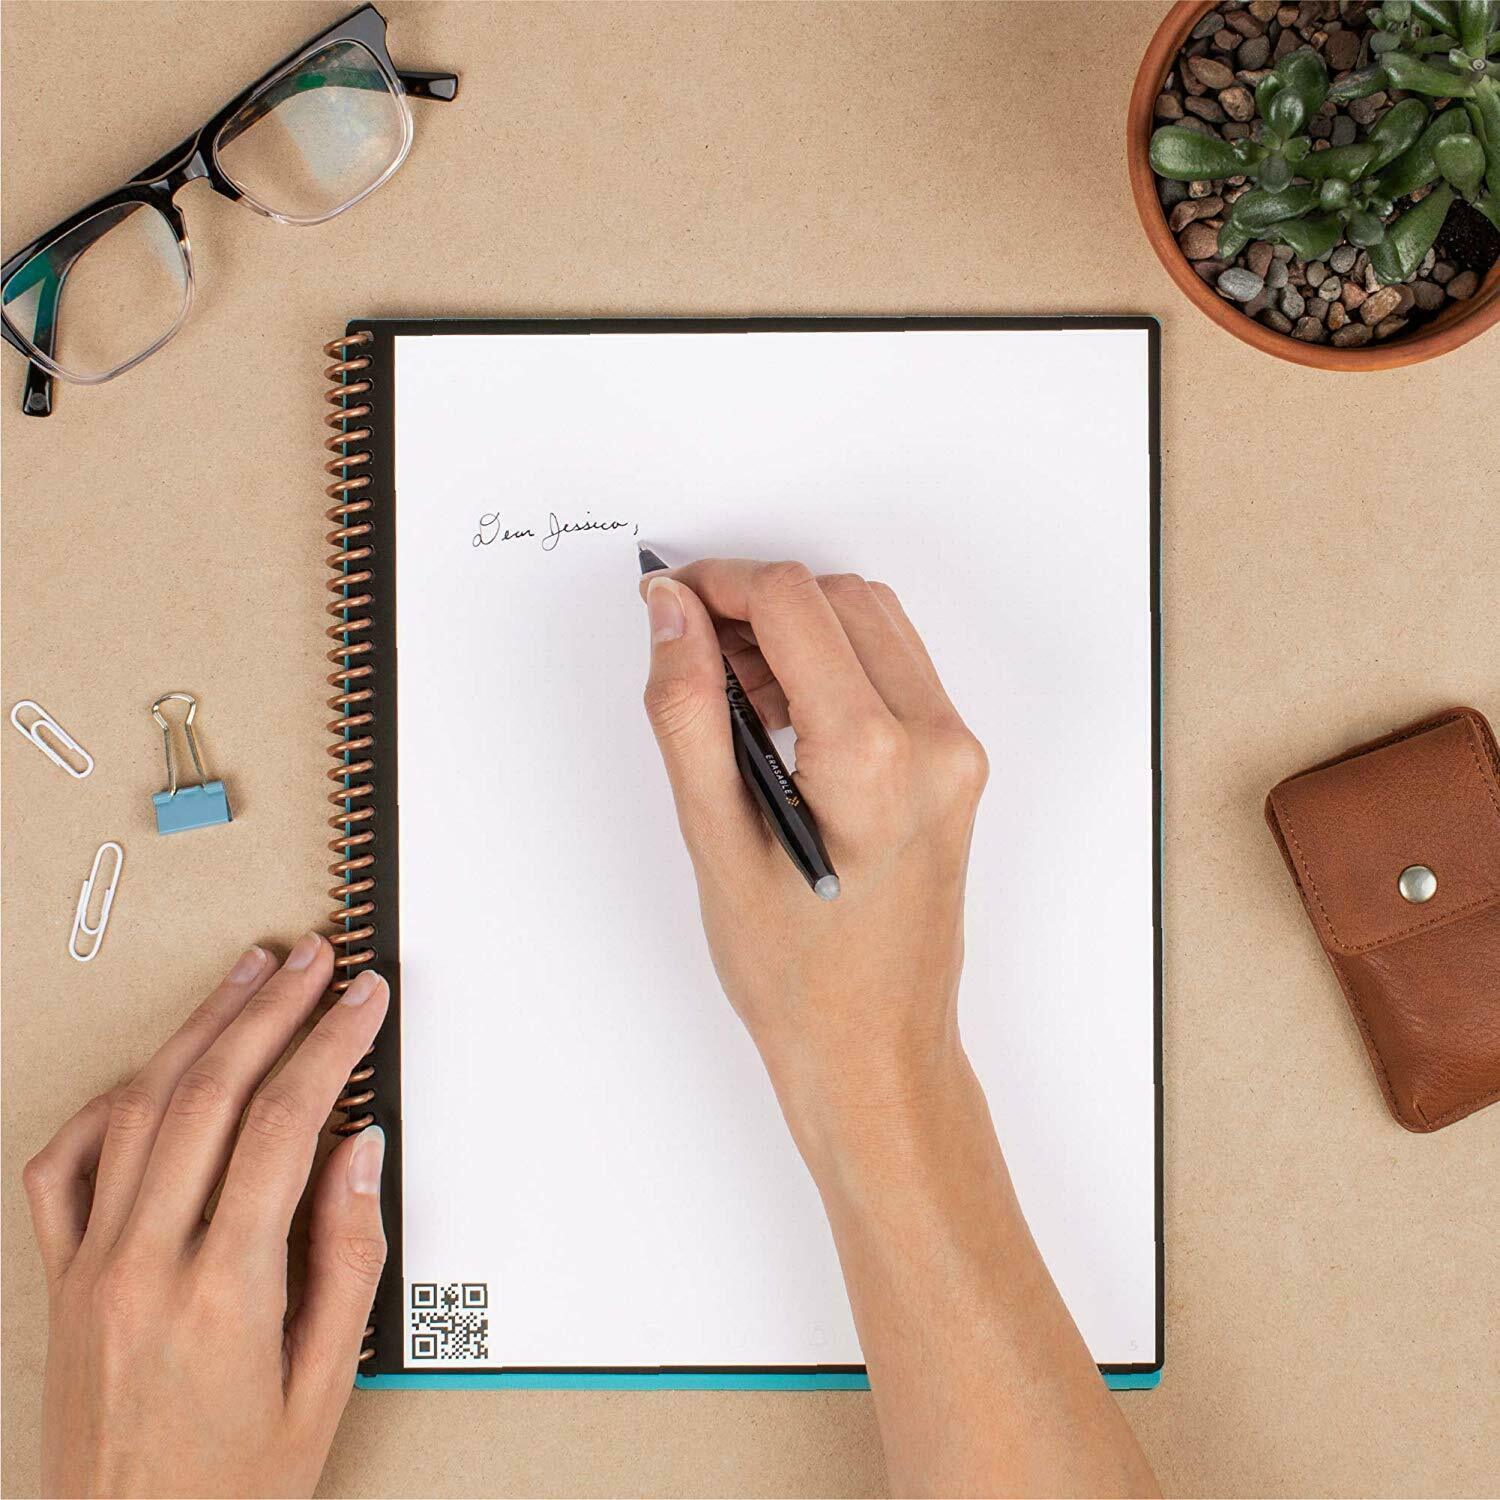 Rocketbook Core Smart Reusable Notebook Pen & Microfiber Cloth Letter Size